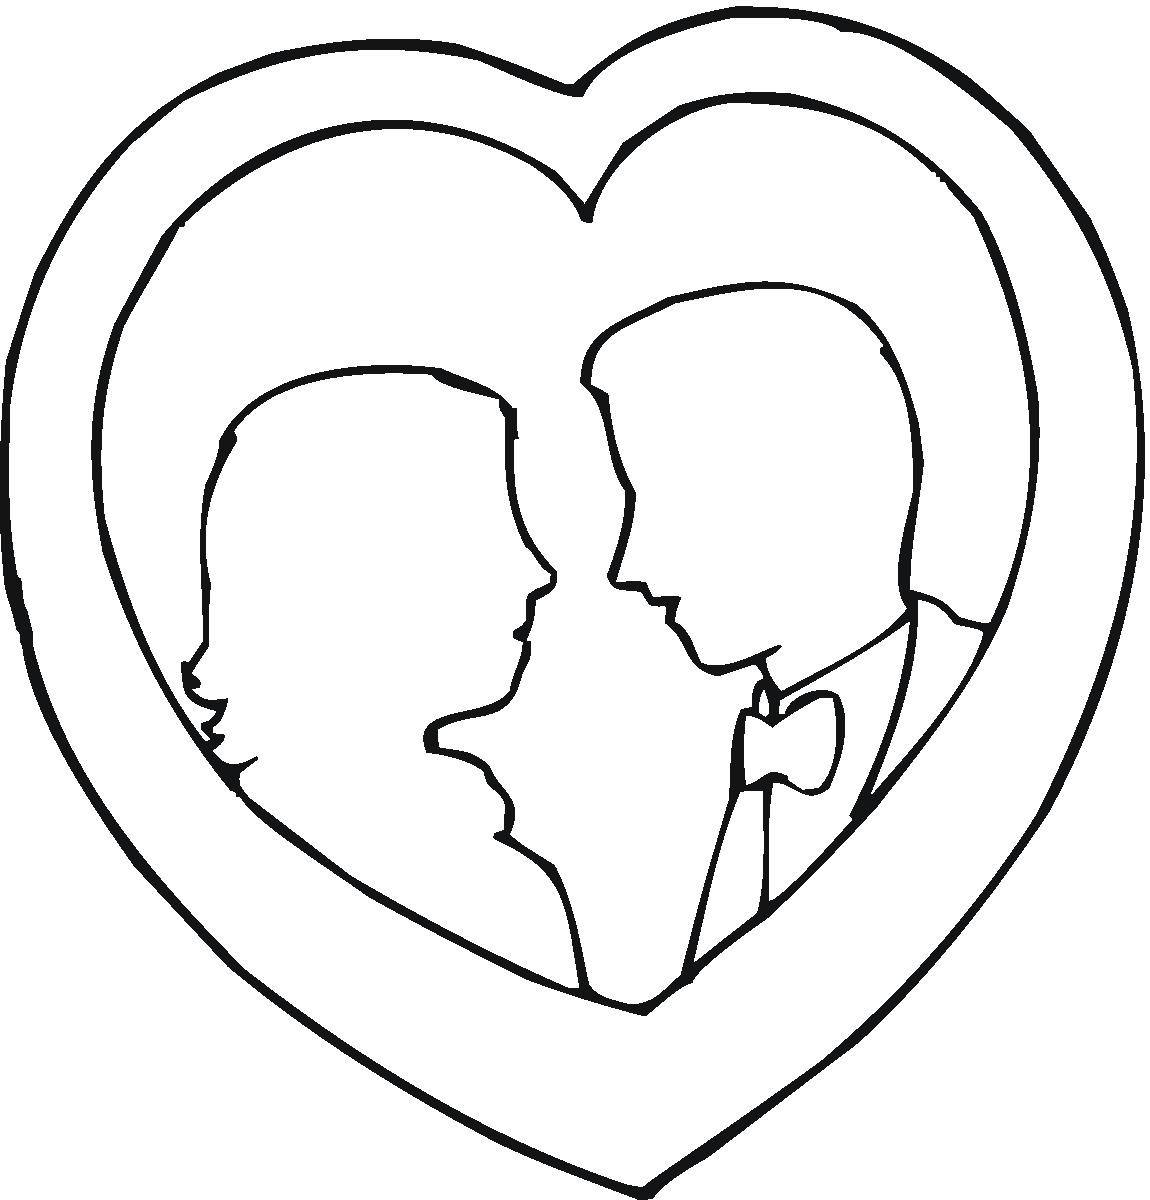 Couple In Heart Outline Clip Art